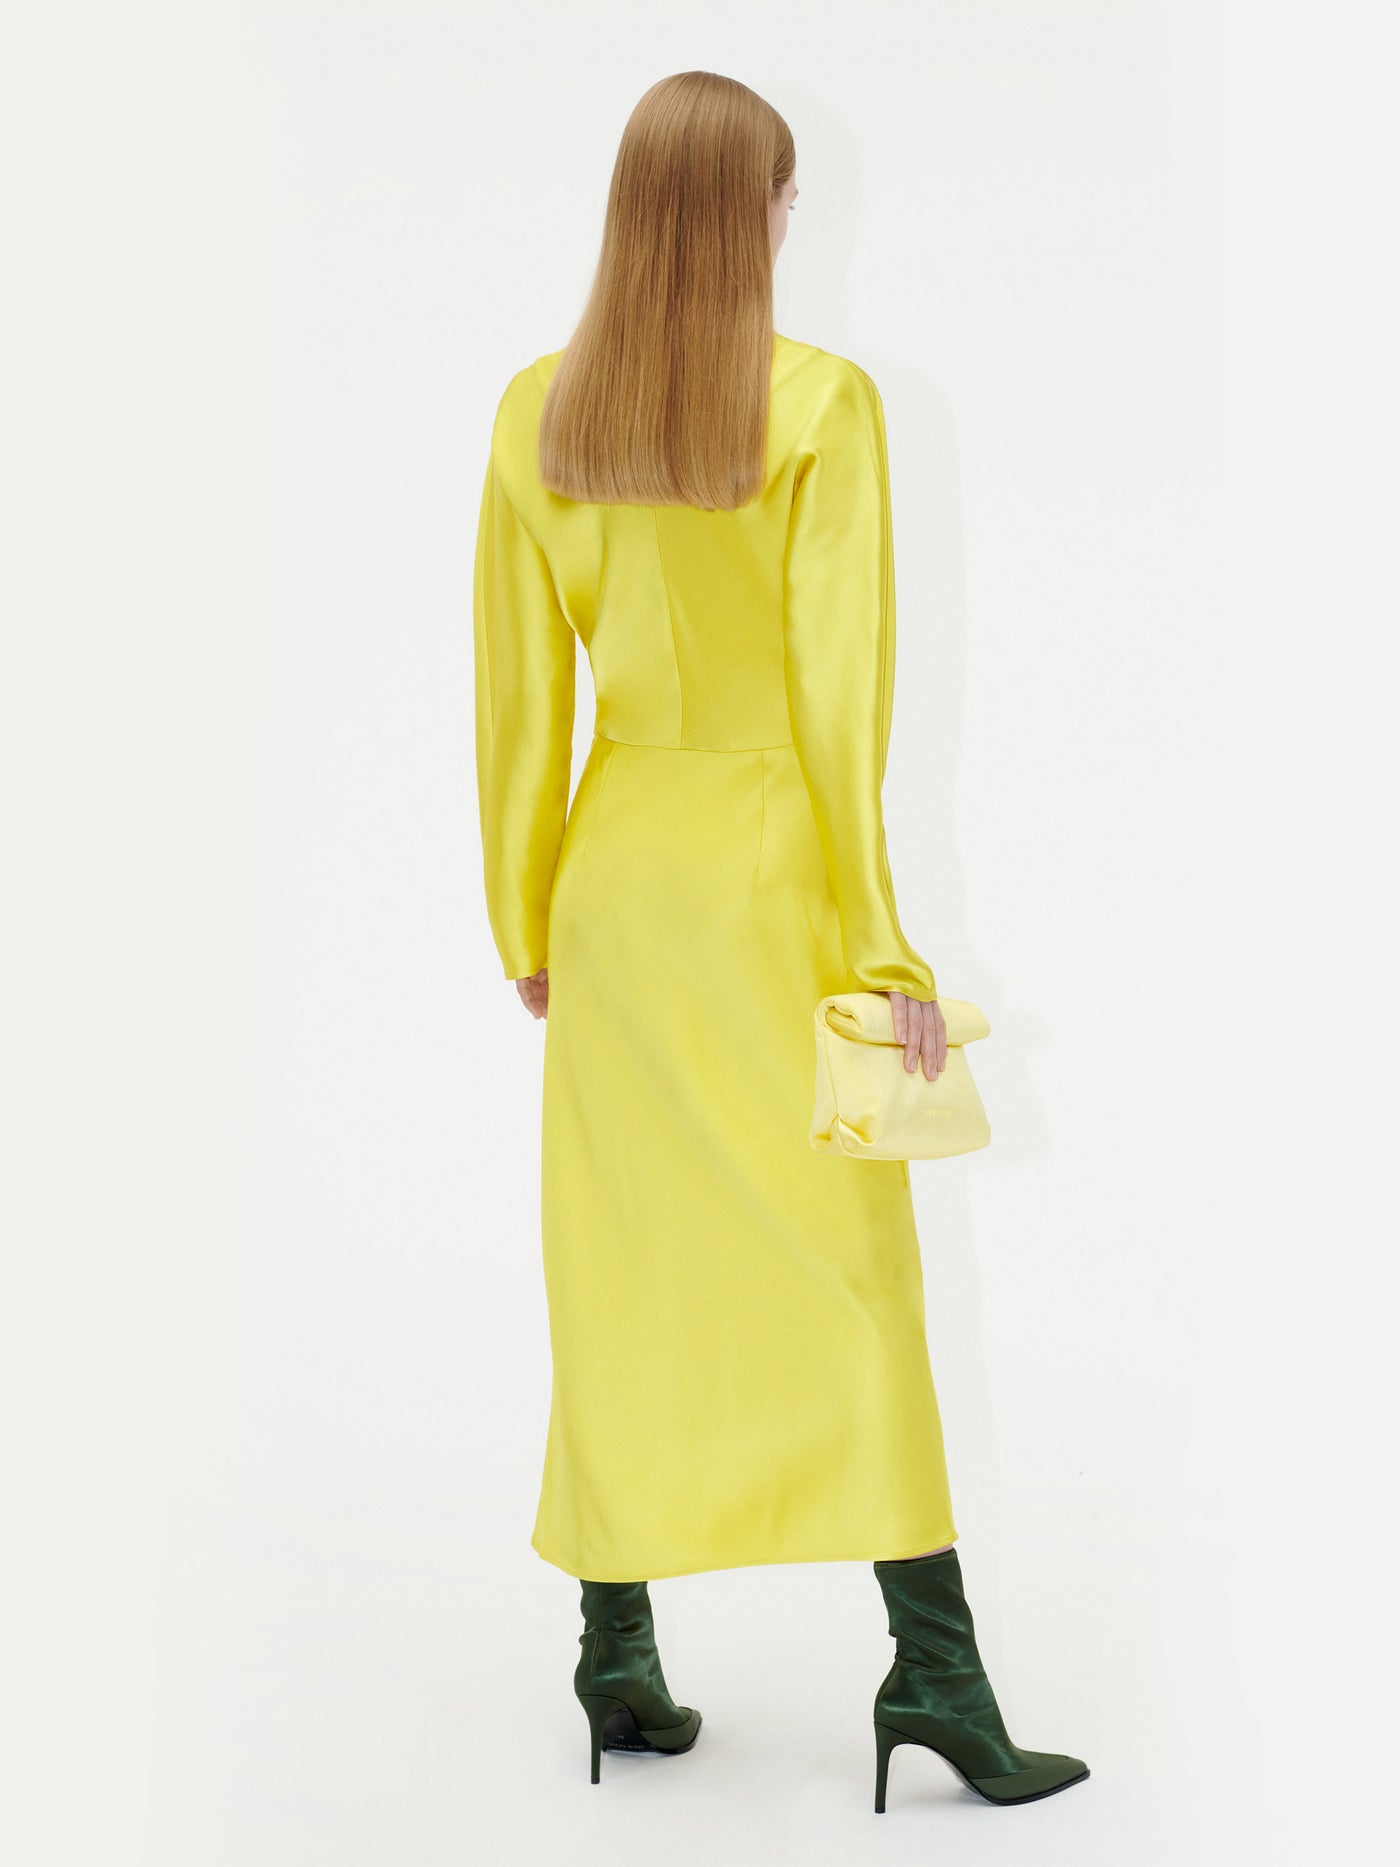 Damai dress, yellow